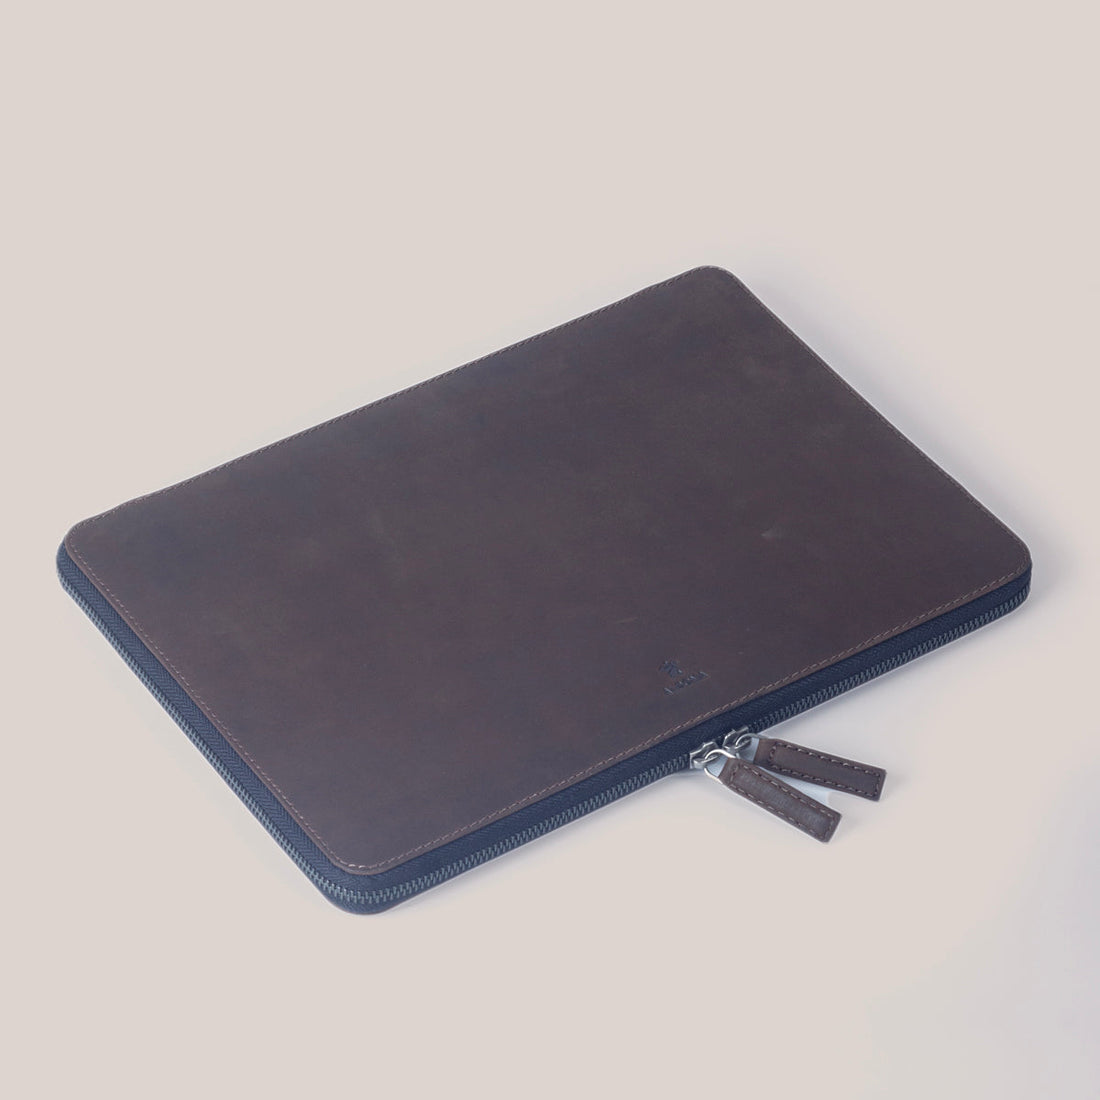 DELL XPS 15 Zippered Laptop Case - Felt and Tan Crunch